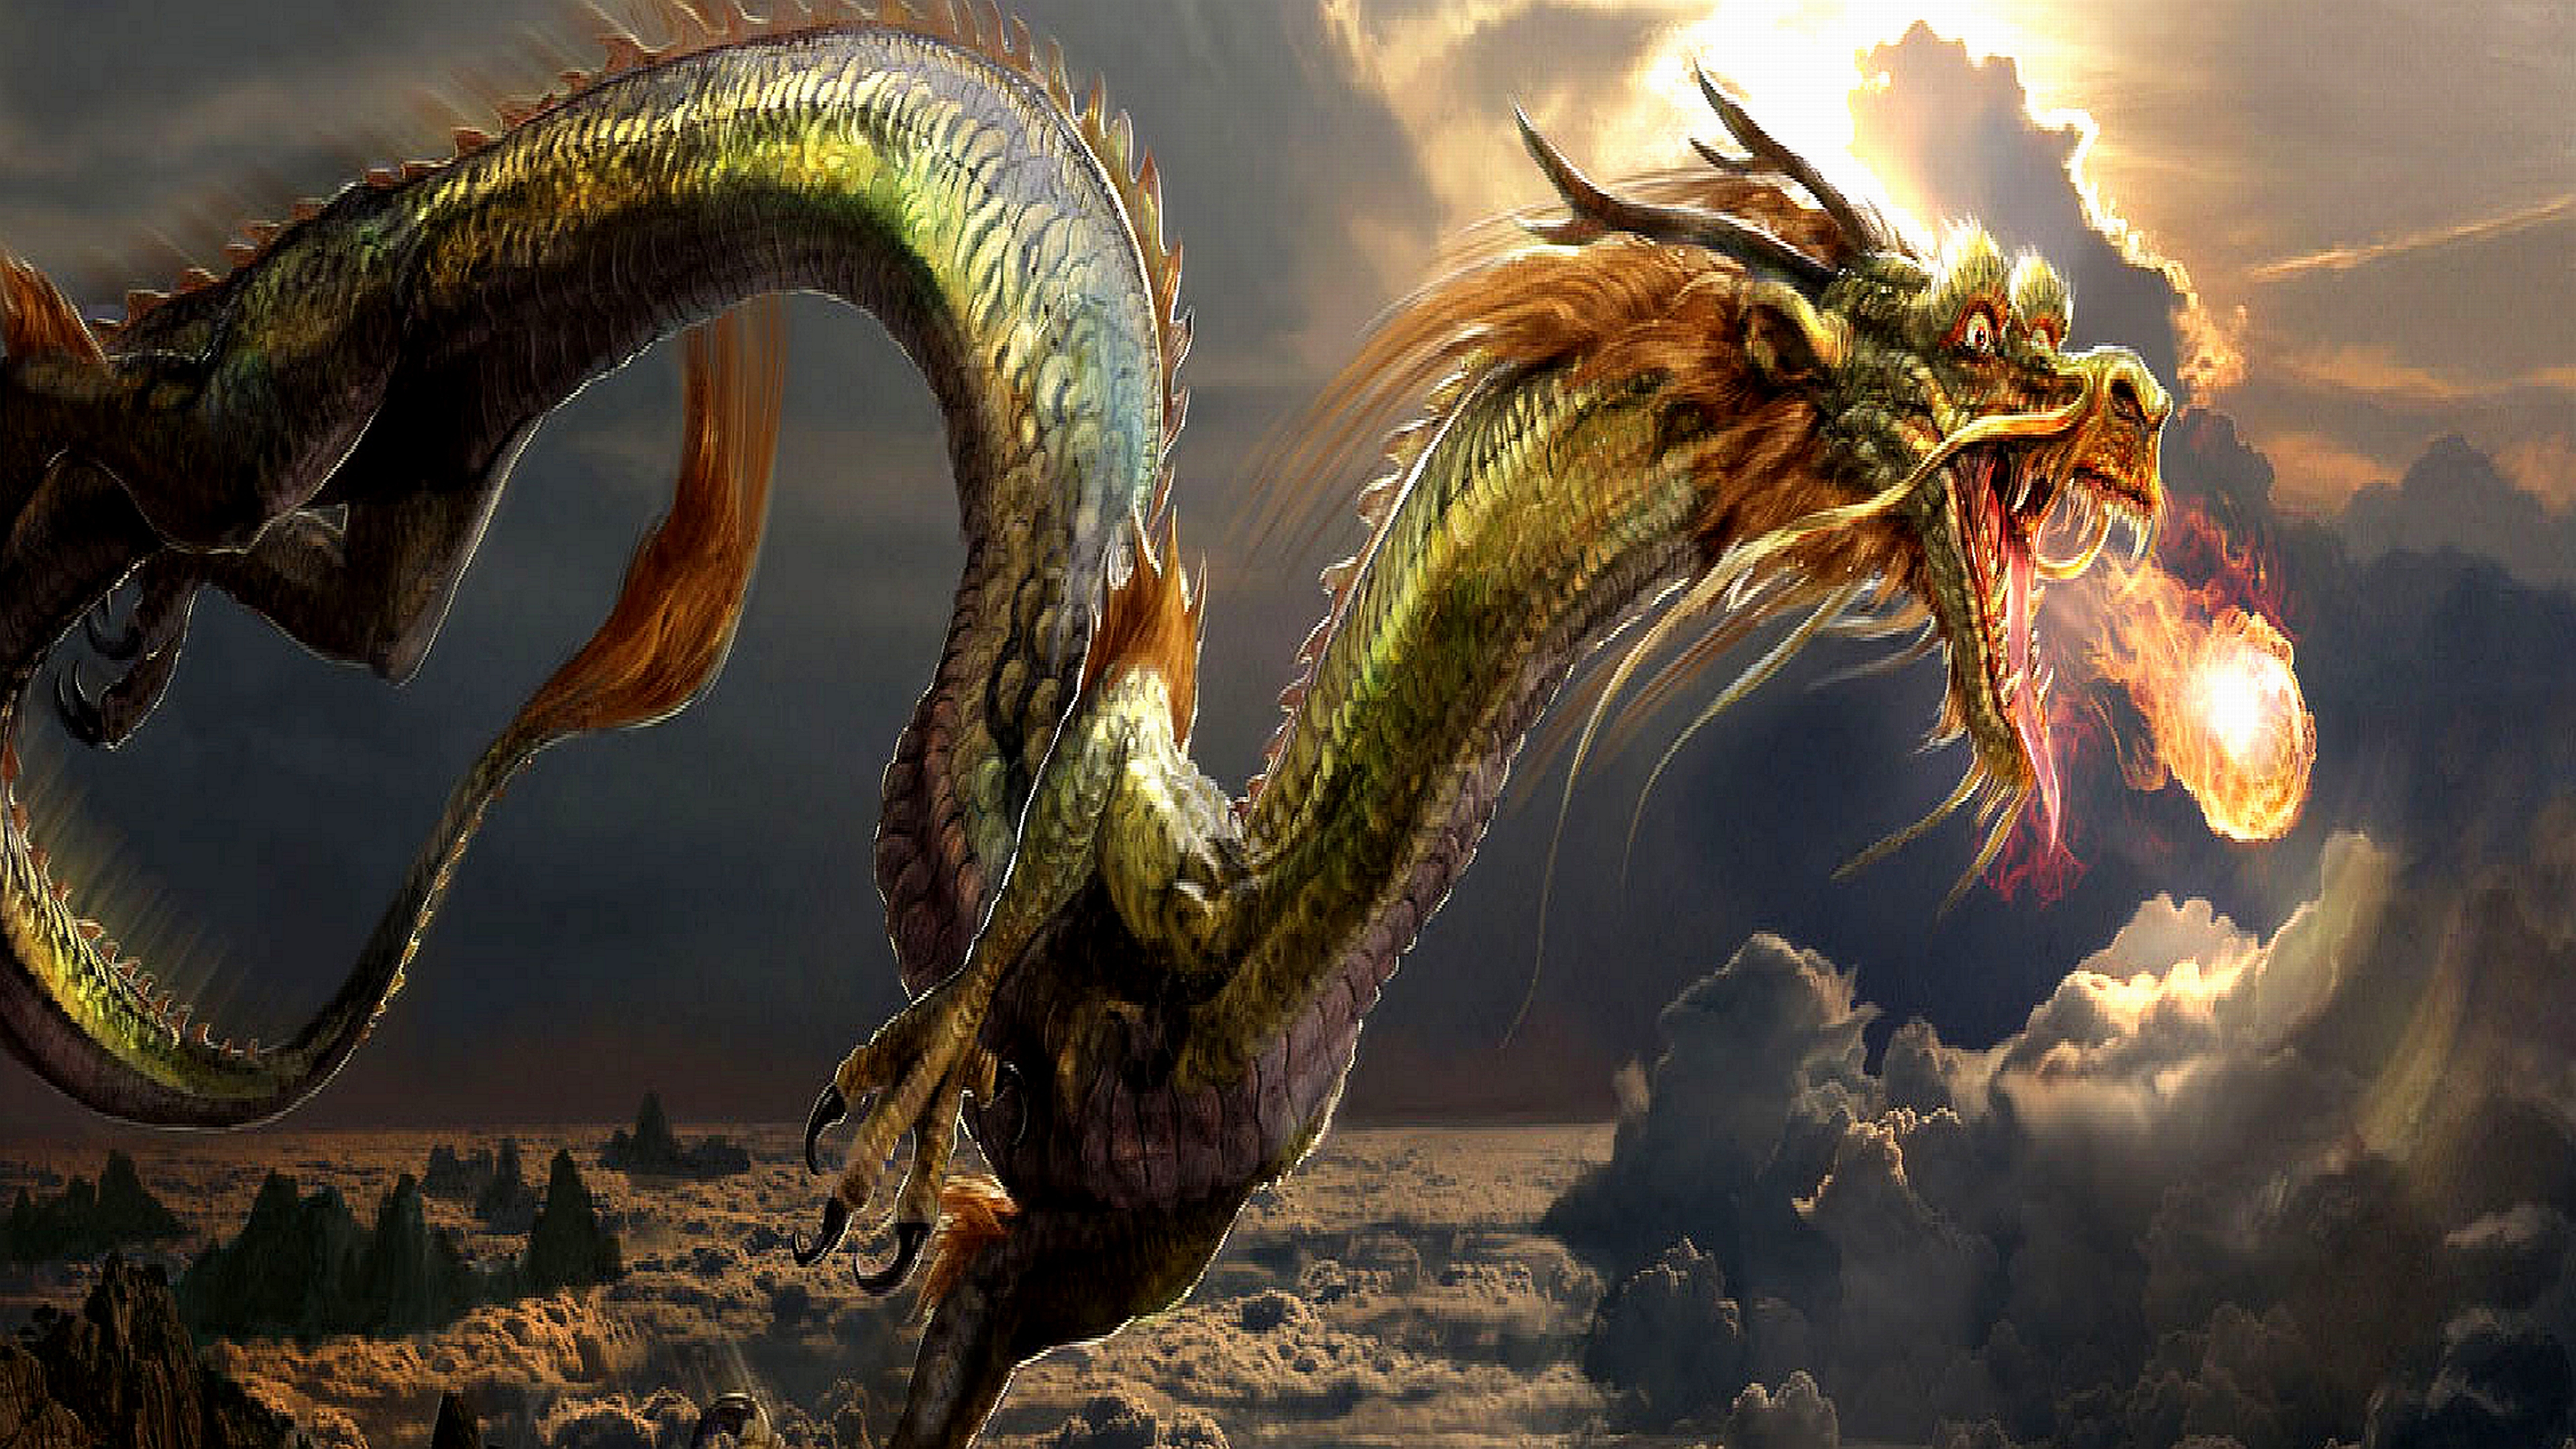 4k dragon wallpaper,dragon,cg artwork,mythology,extinction,fictional character